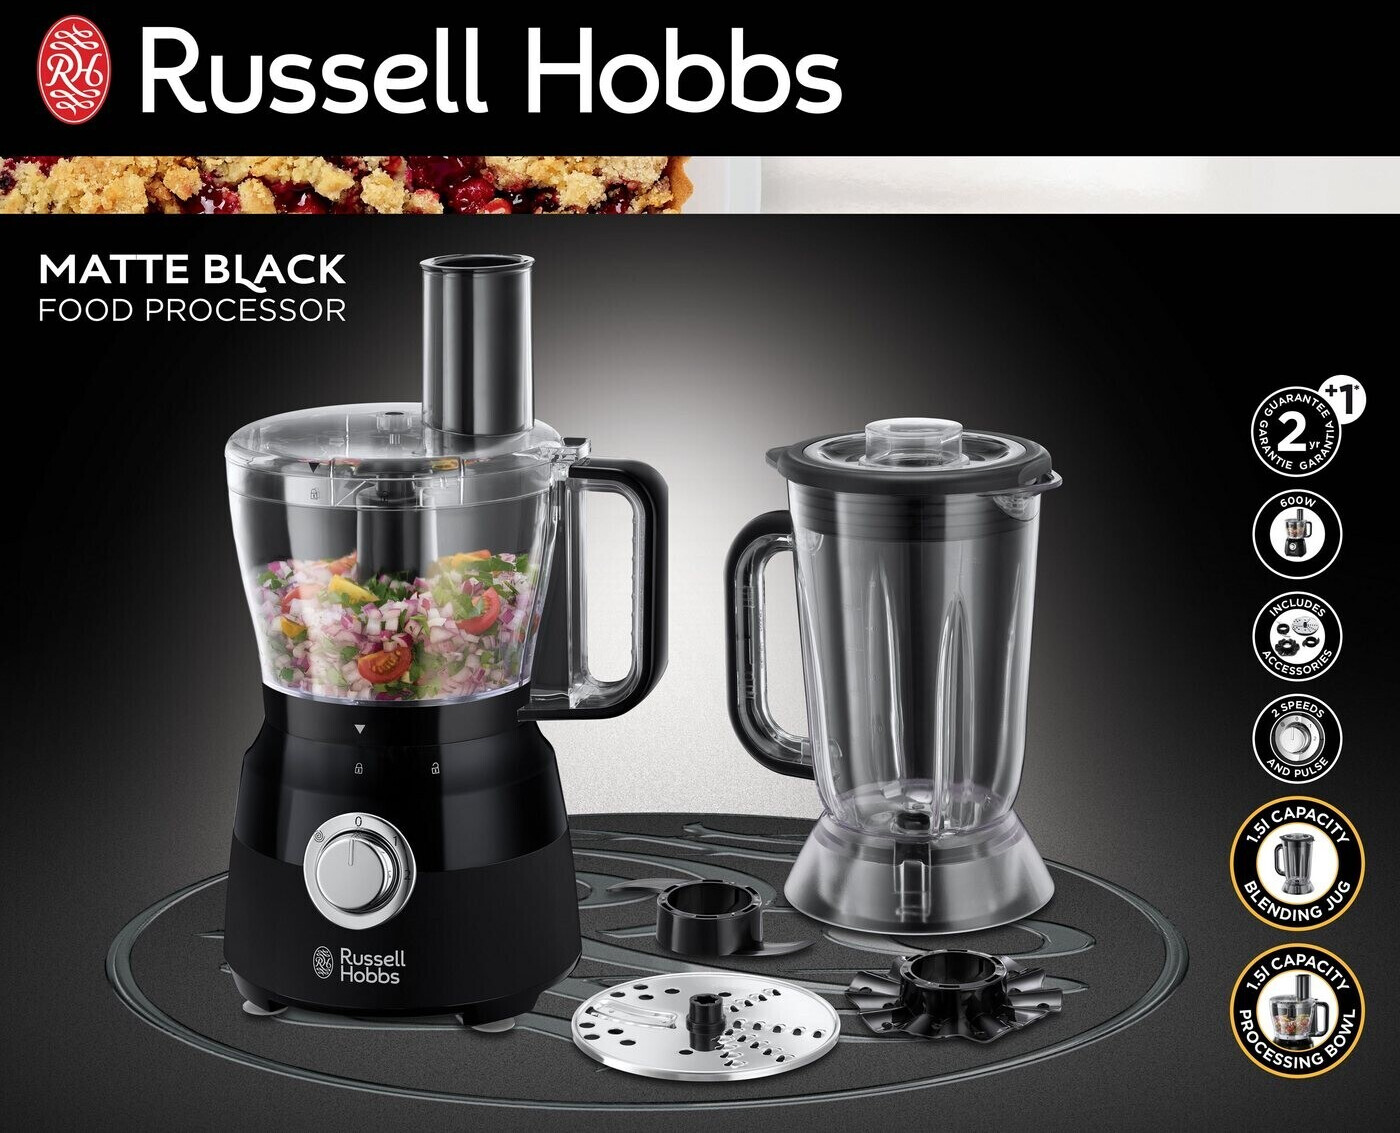 Russell Hobbs Food Processor Matte Black (24732-56 ) ab 67,40 € |  Preisvergleich bei